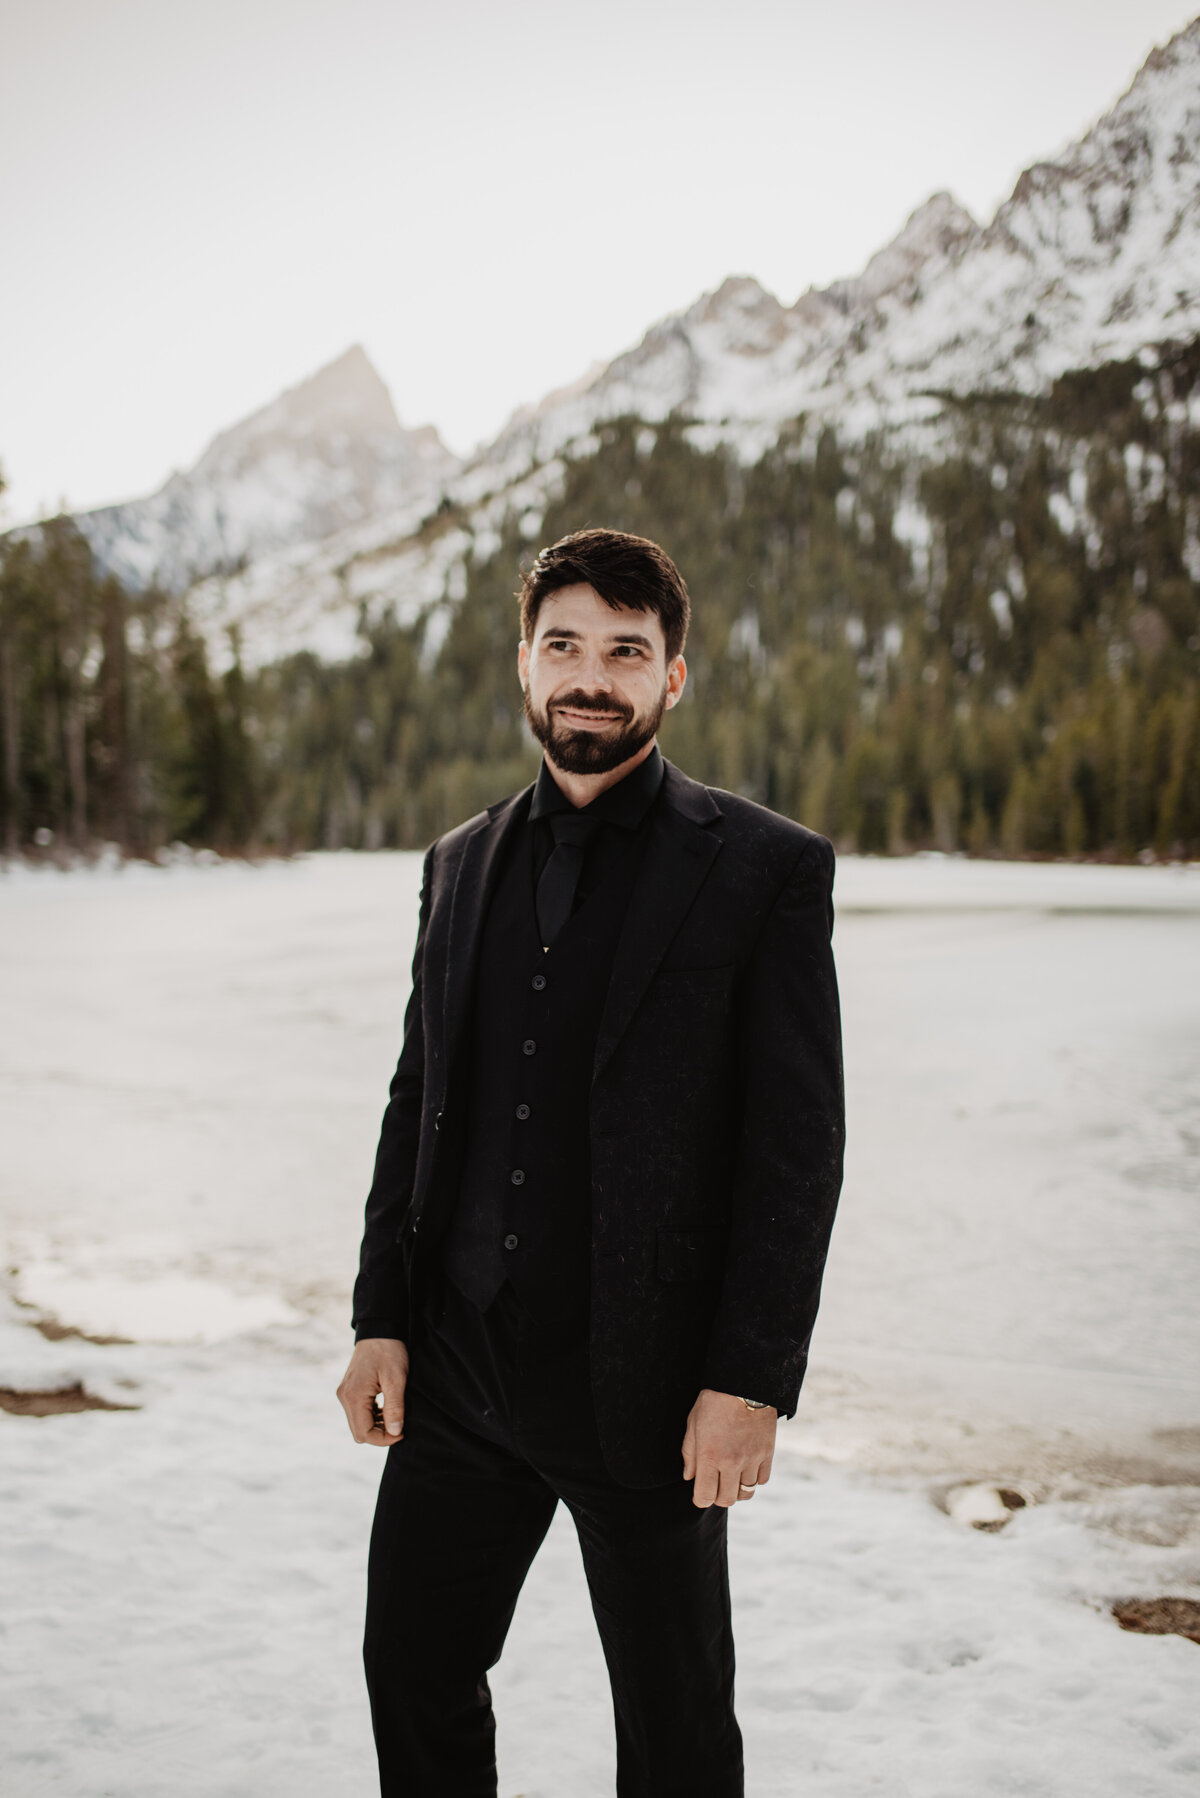 Jackson Hole Photographers capture groom smiling during portraits